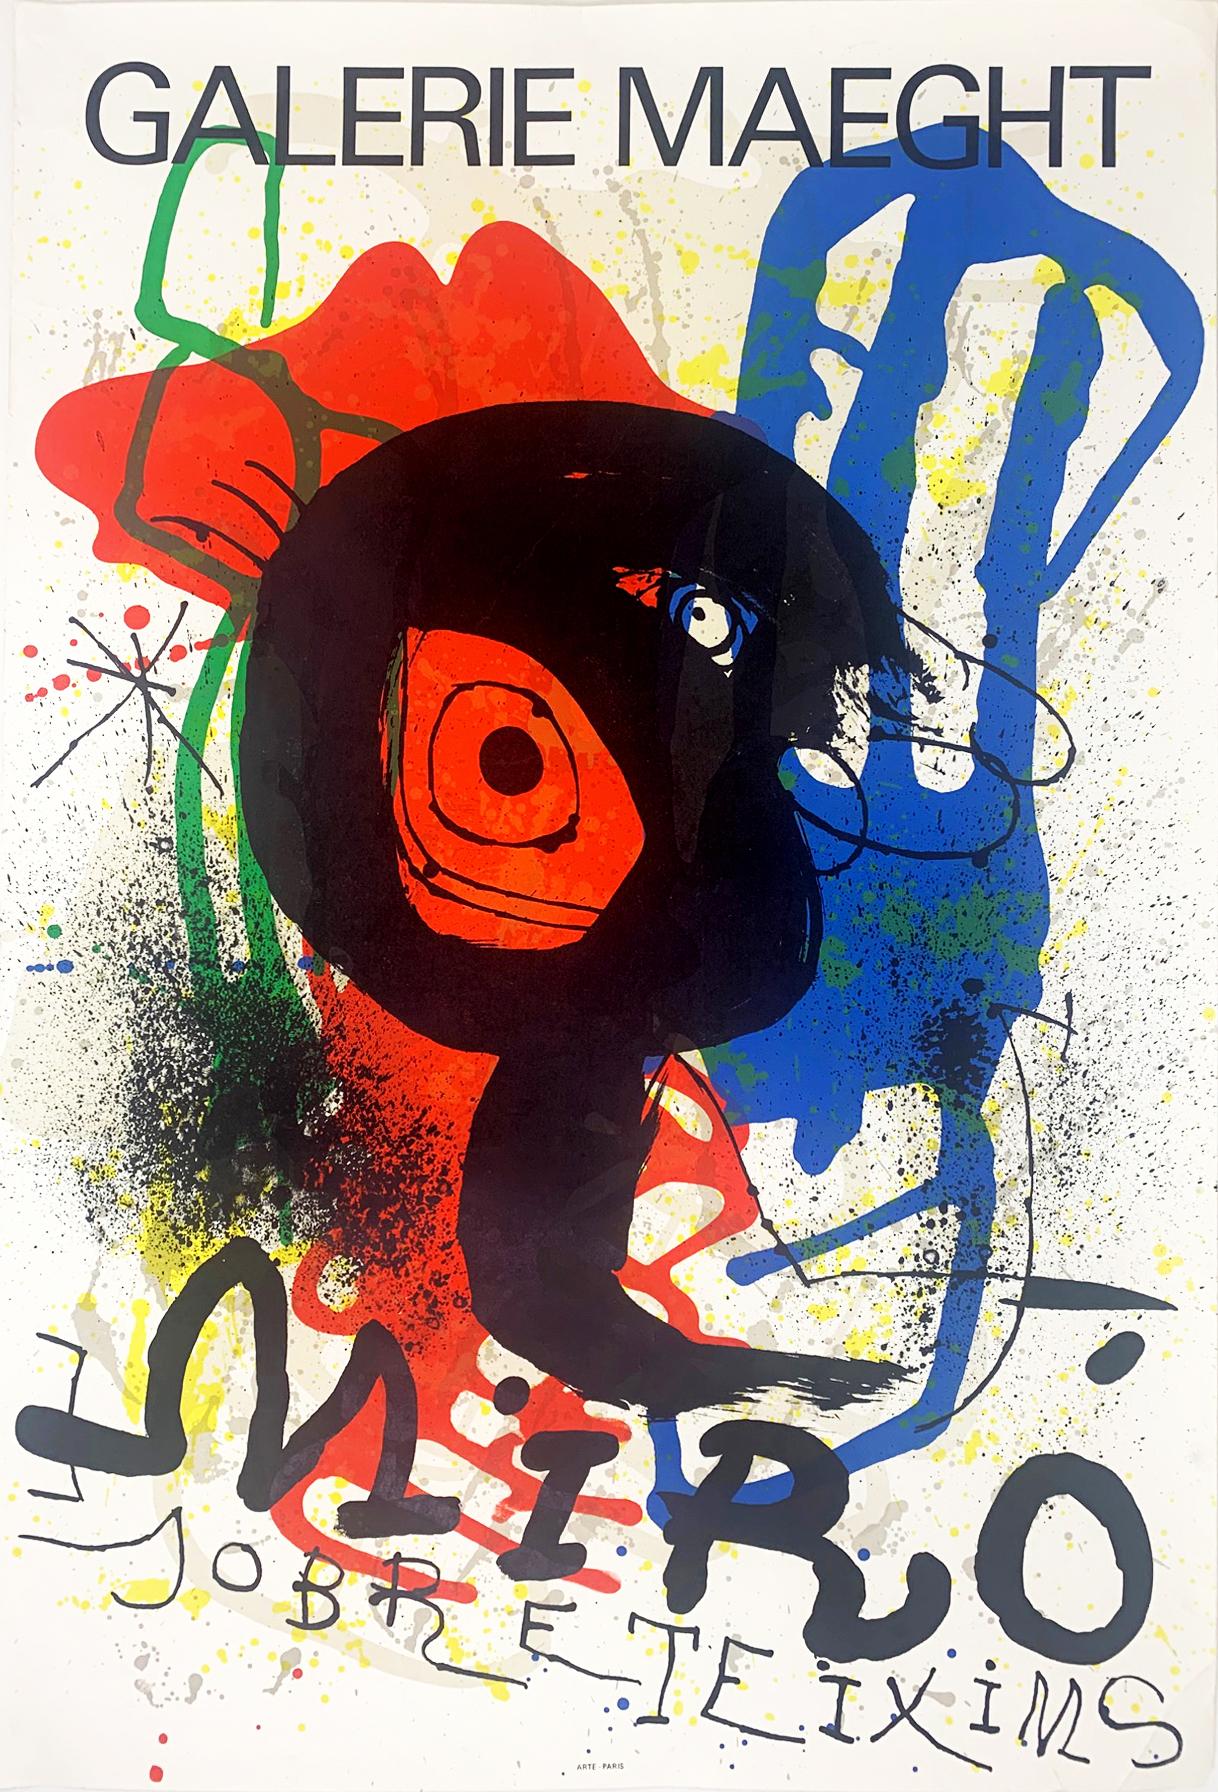 Joan Miró Abstract Print – Sobreteixims